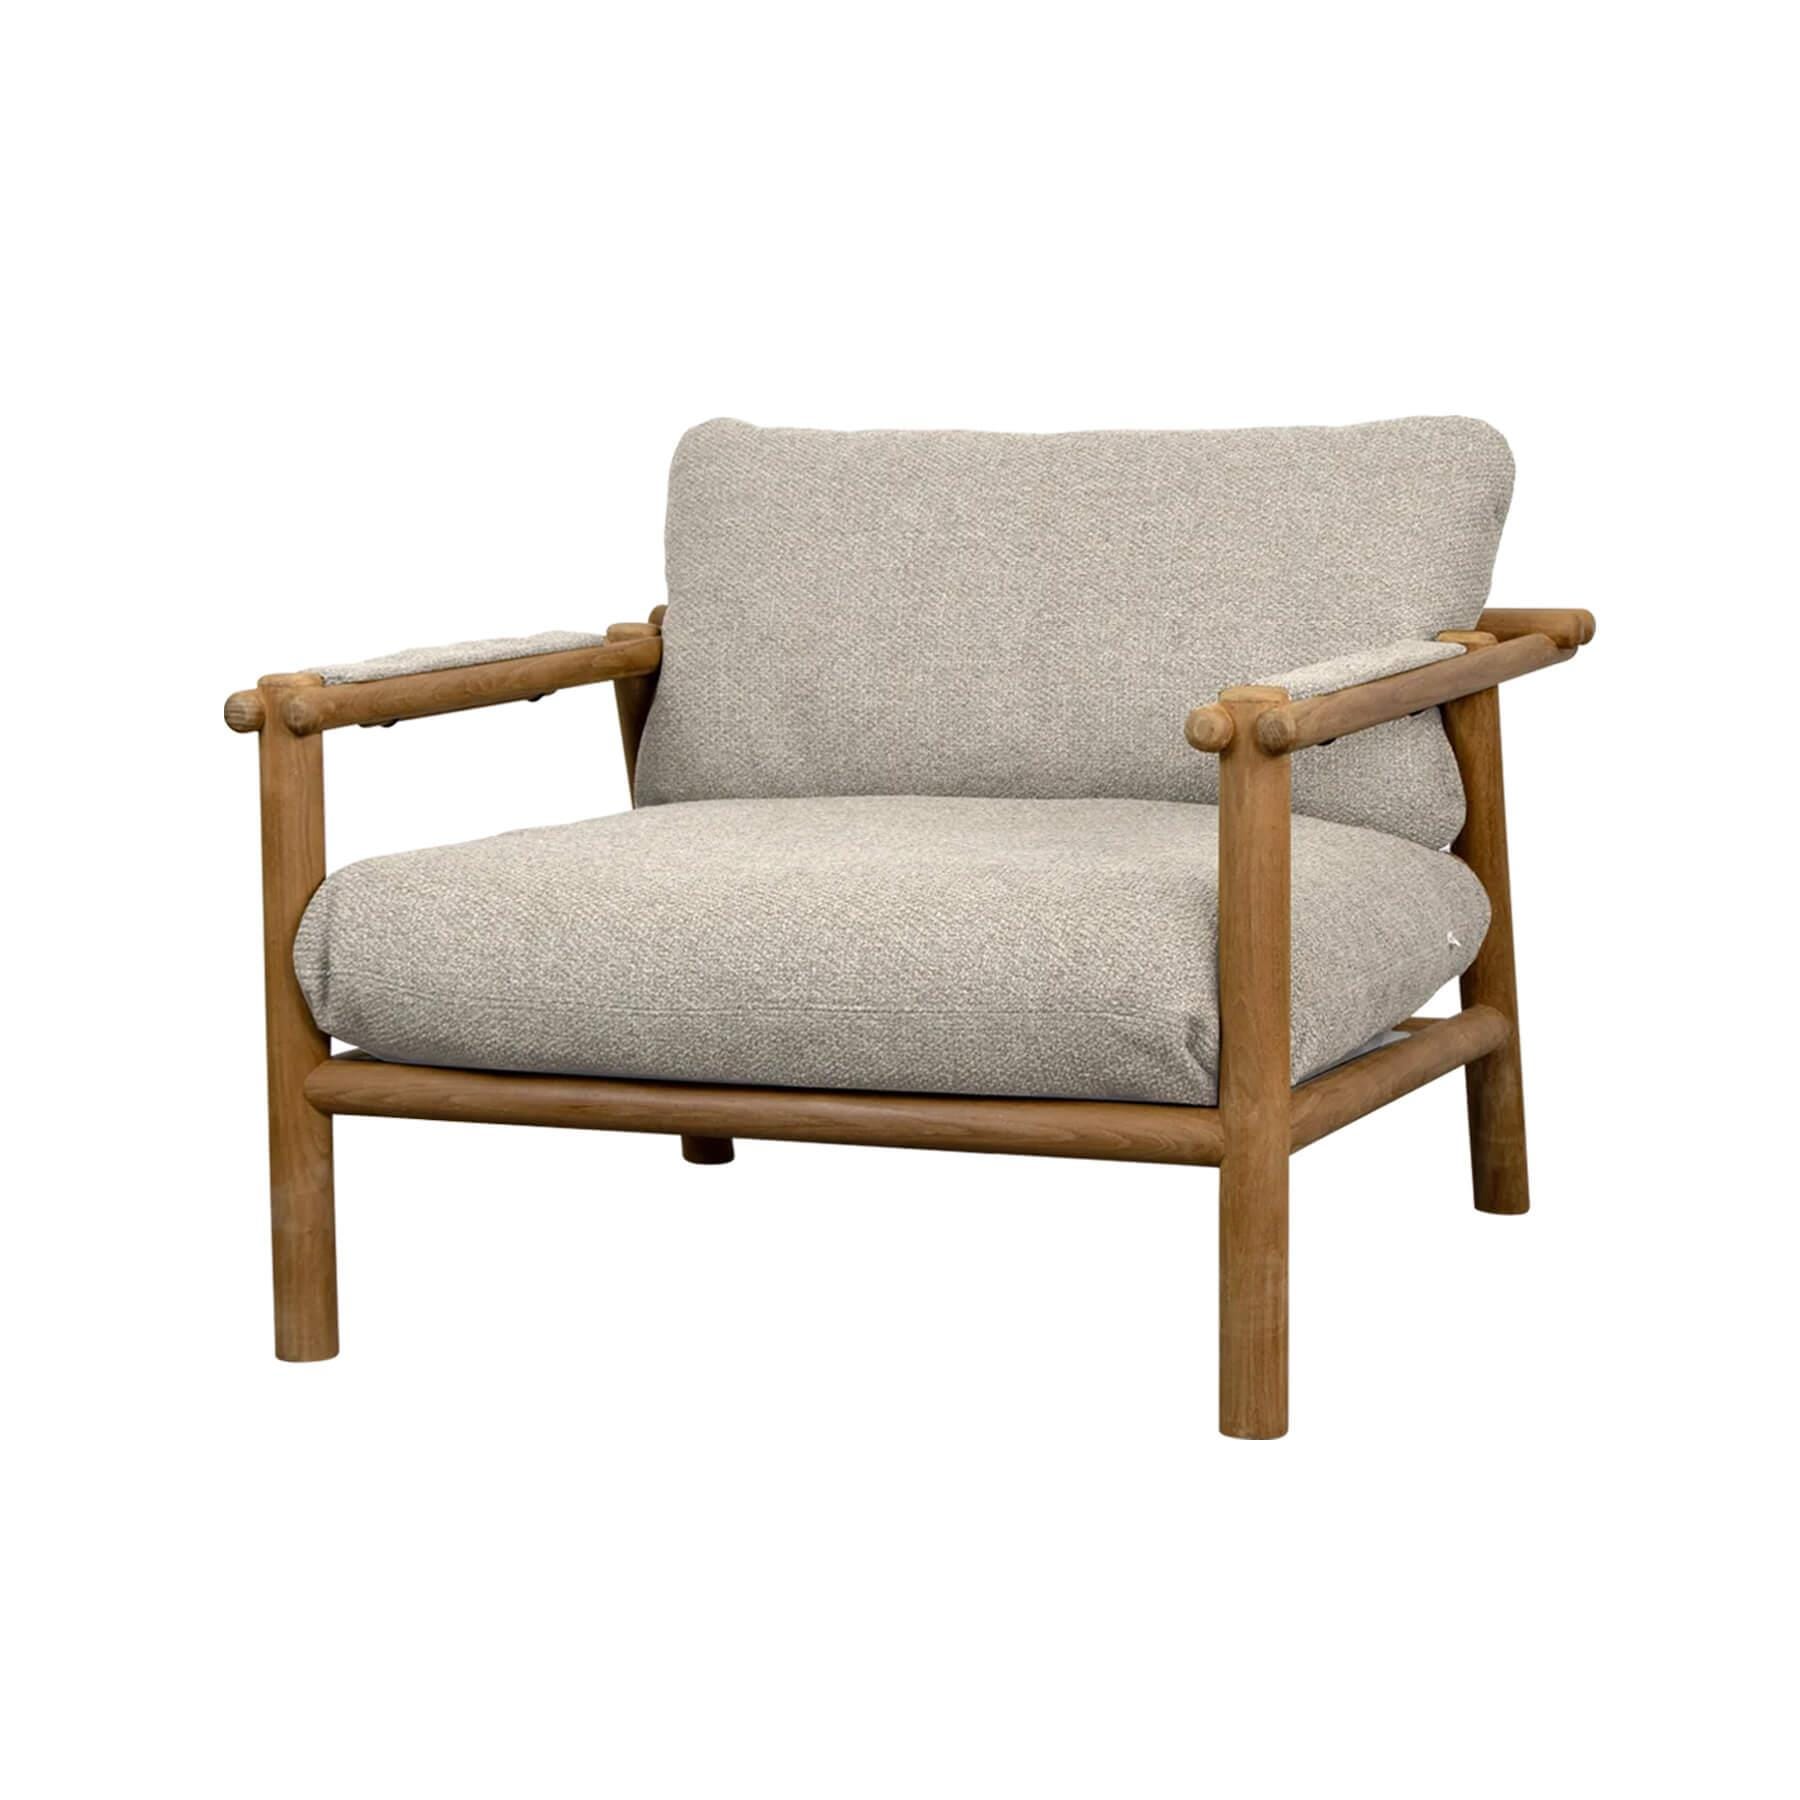 Caneline Sticks Outdoor Lounge Chair Teak Desert Sand Cushion Grey